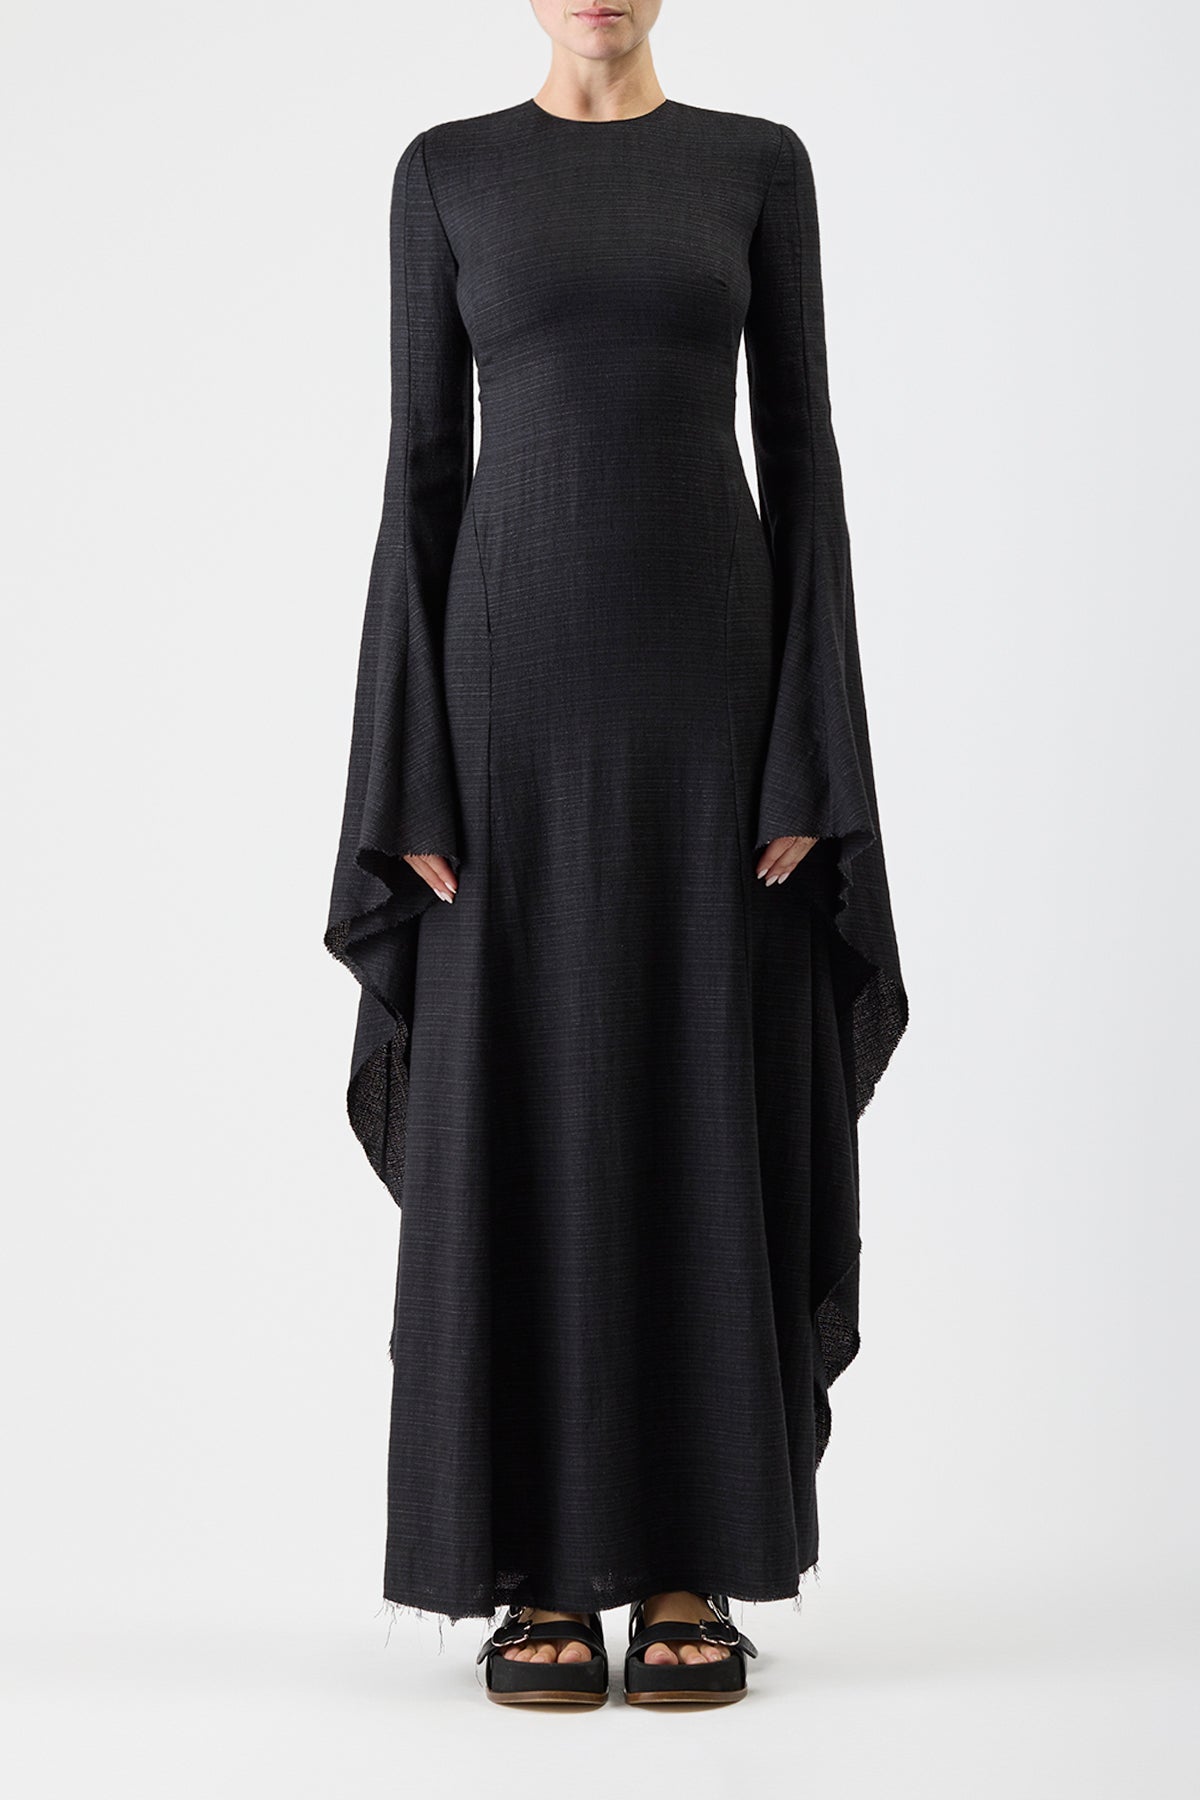 Sigrud Draped Dress in Black Wool Silk Gauze